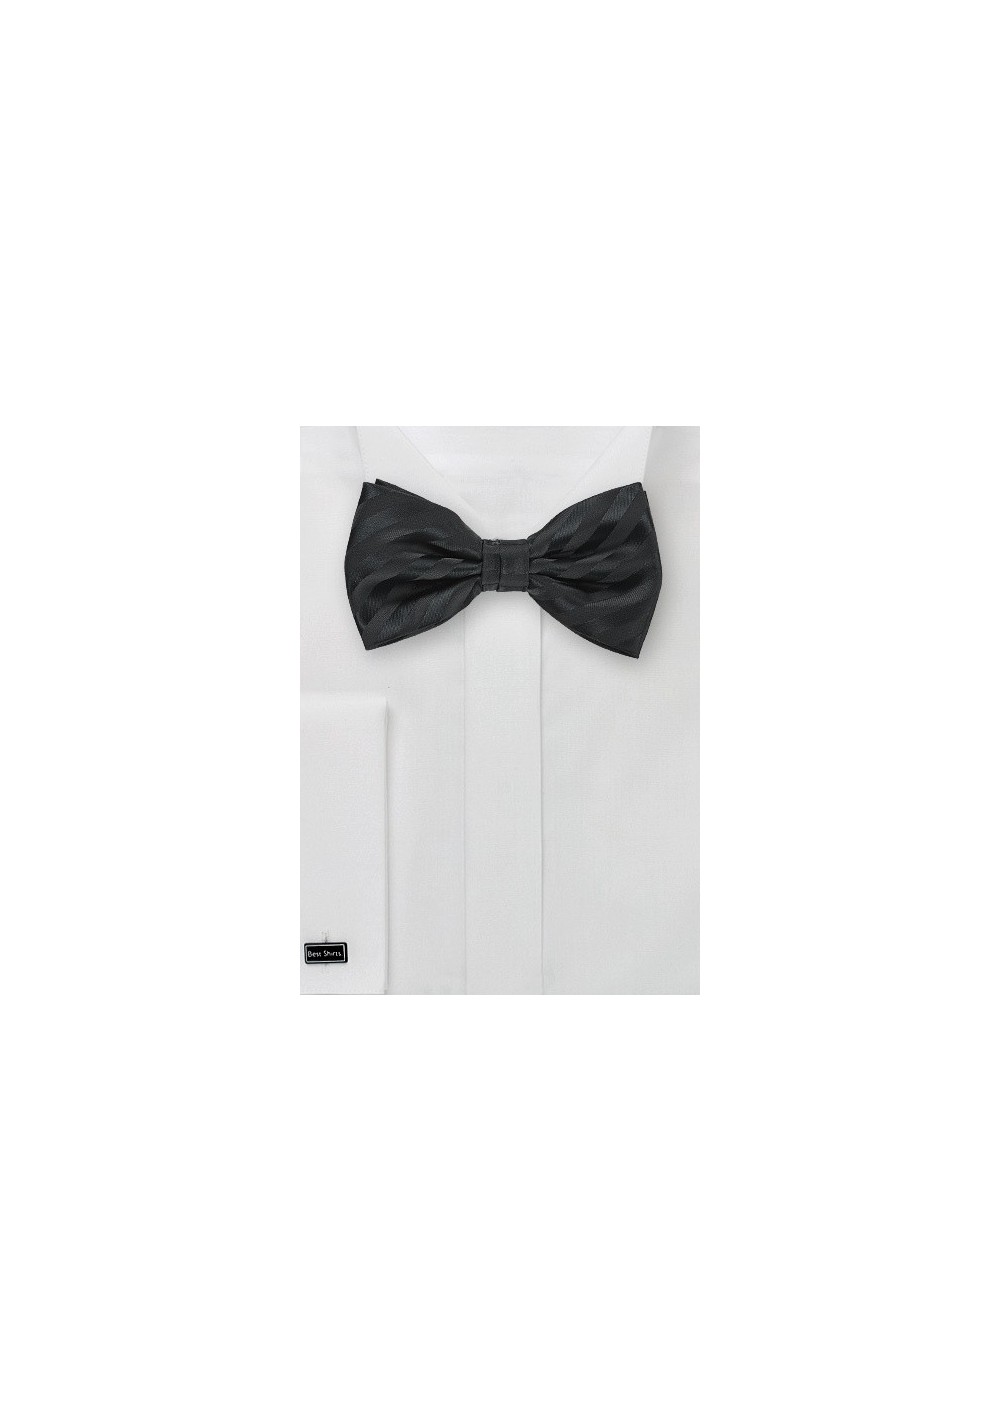 Formal Black Striped Bow Tie for Kids